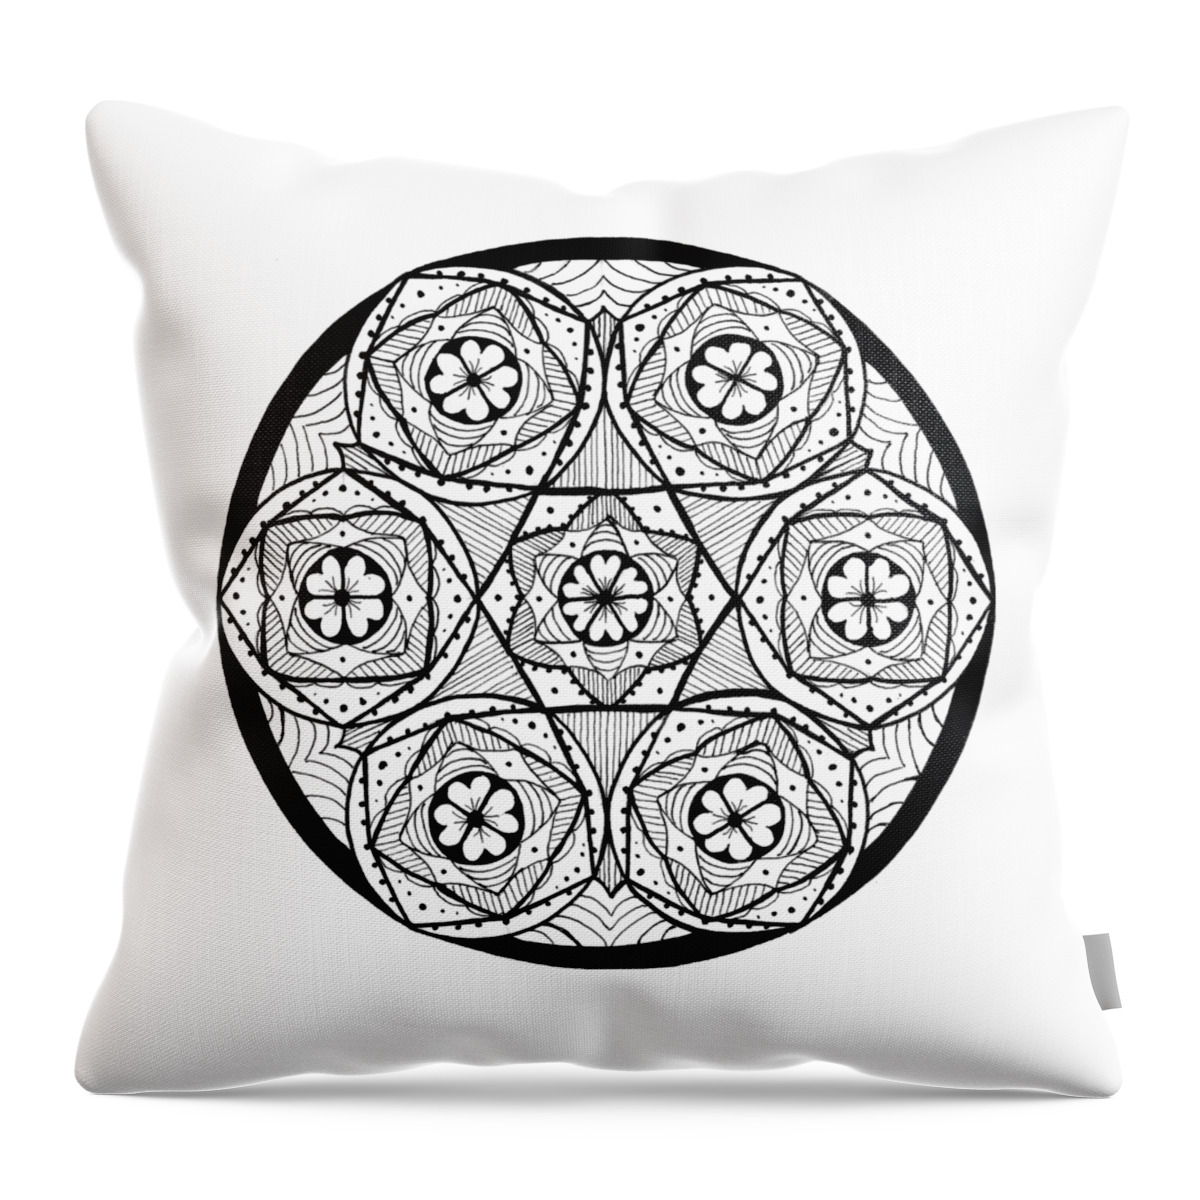 Mandala Throw Pillow featuring the drawing Mandala #6 - Cinnamon Rolls by Eseret Art